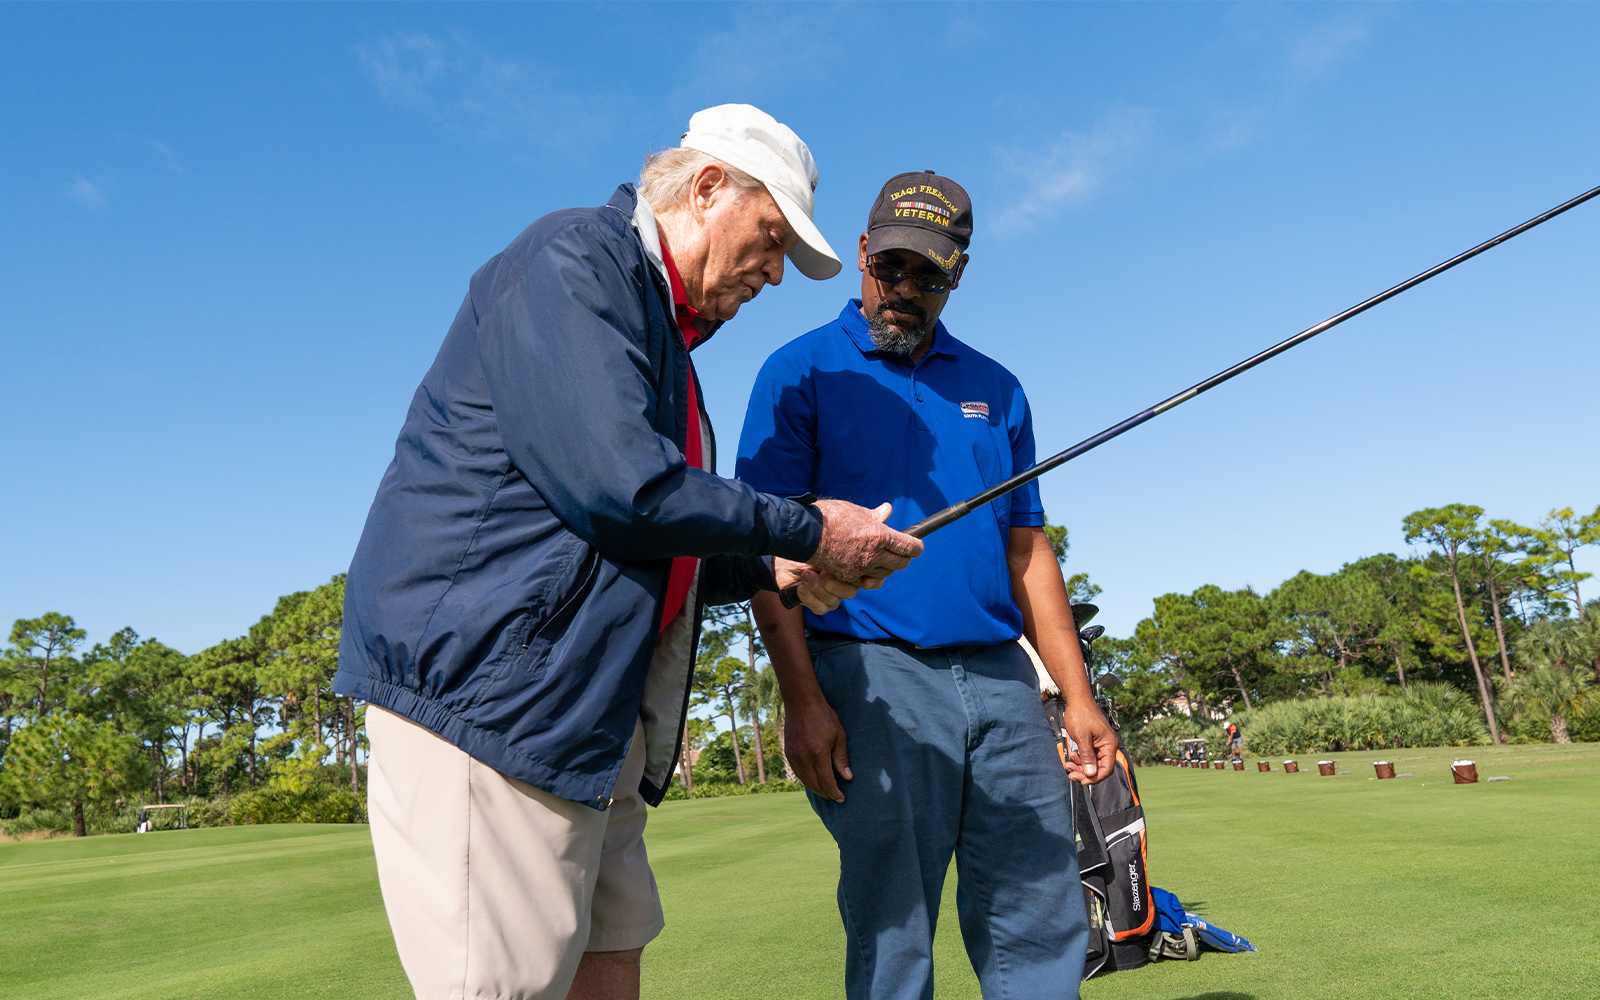 Jack Nicklaus assists a PGA HOPE Veteran during the Jack Nicklaus PGA HOPE Veterans Lessons at the Bear’s Club on November 29, 2021 in Jupiter, FL. (Photo by Hailey Garrett/PGA of America)